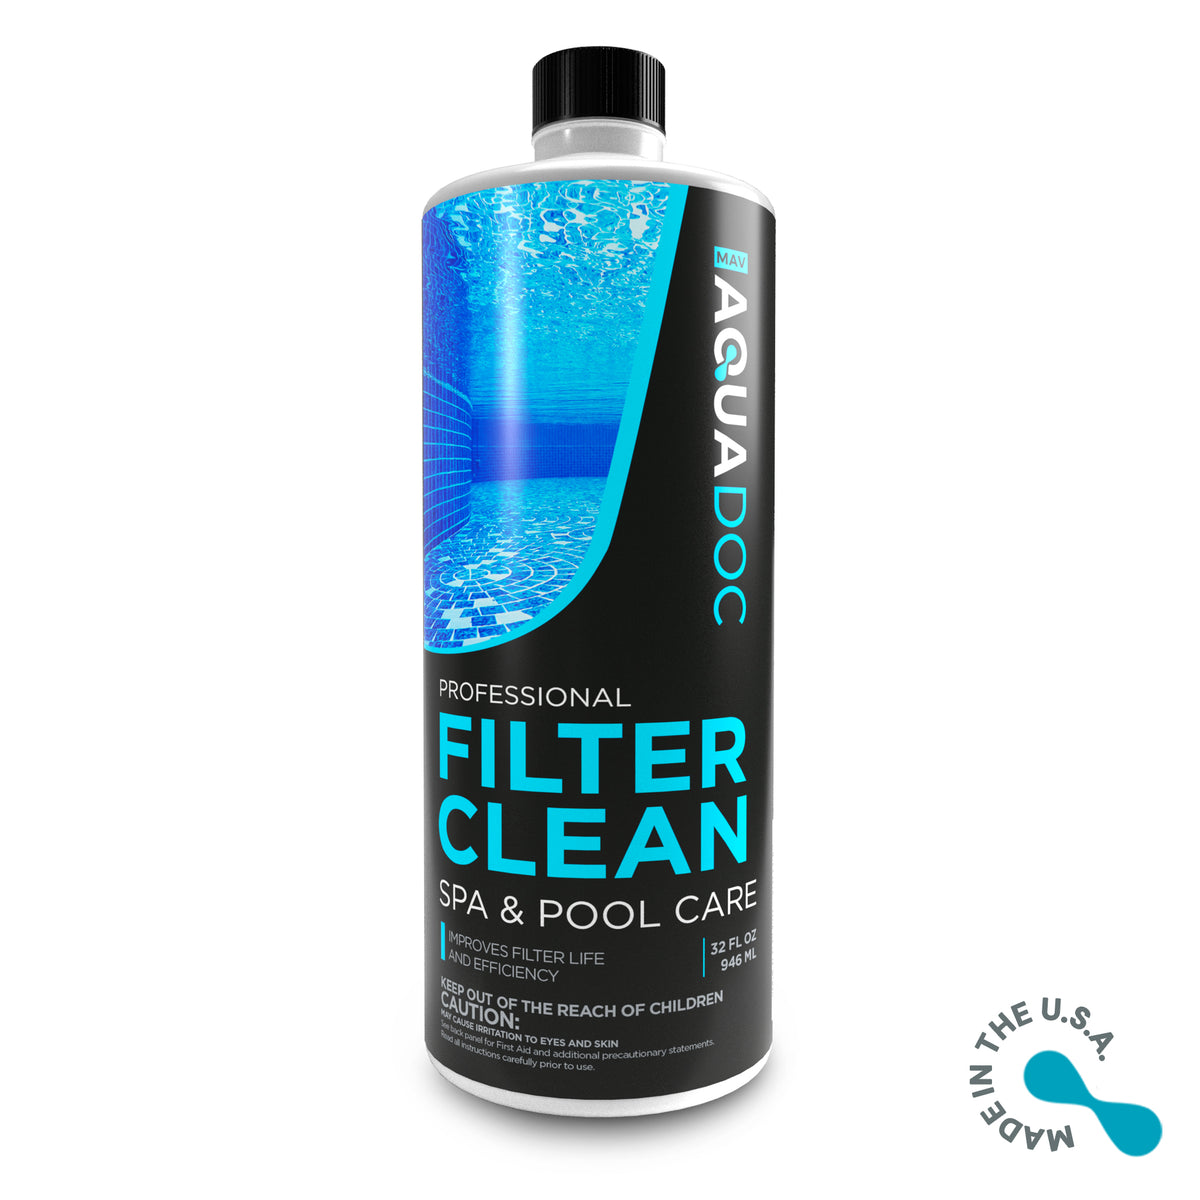 AquaDoc's Filter Cleaner: Enhancing Filter Efficiency